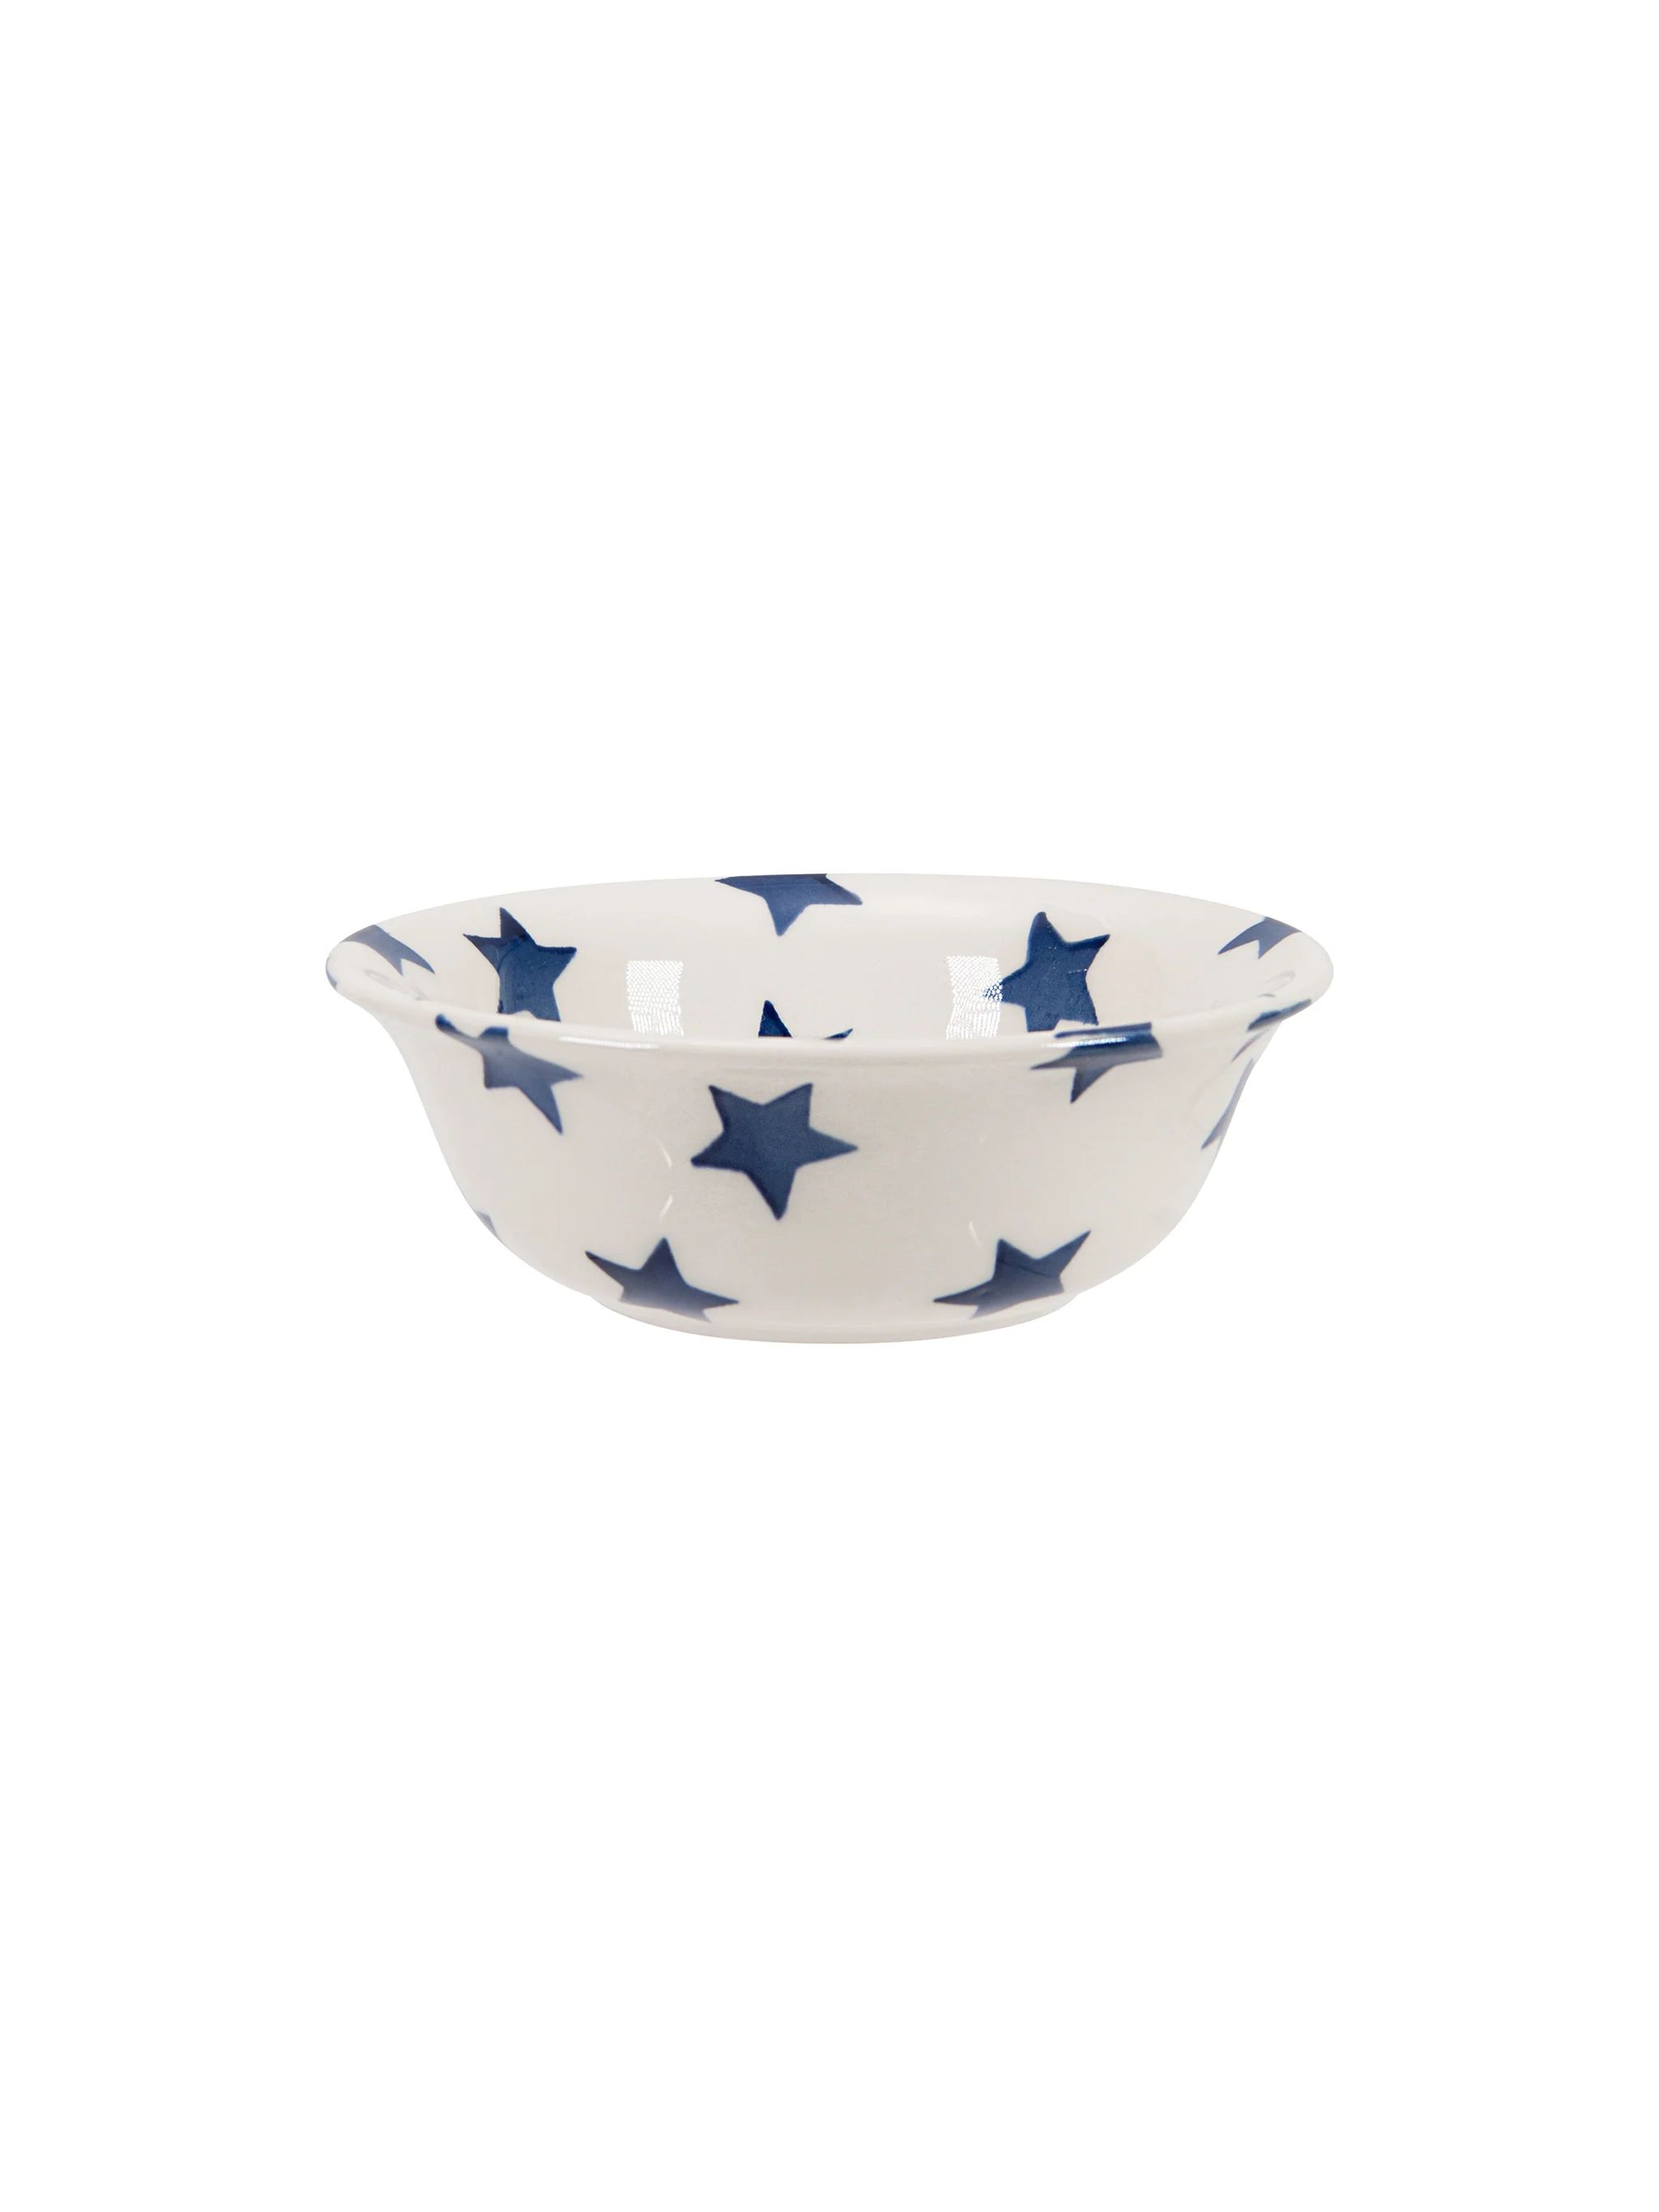 Emma Bridgewater Blue Star Cereal Bowl | Weston Table